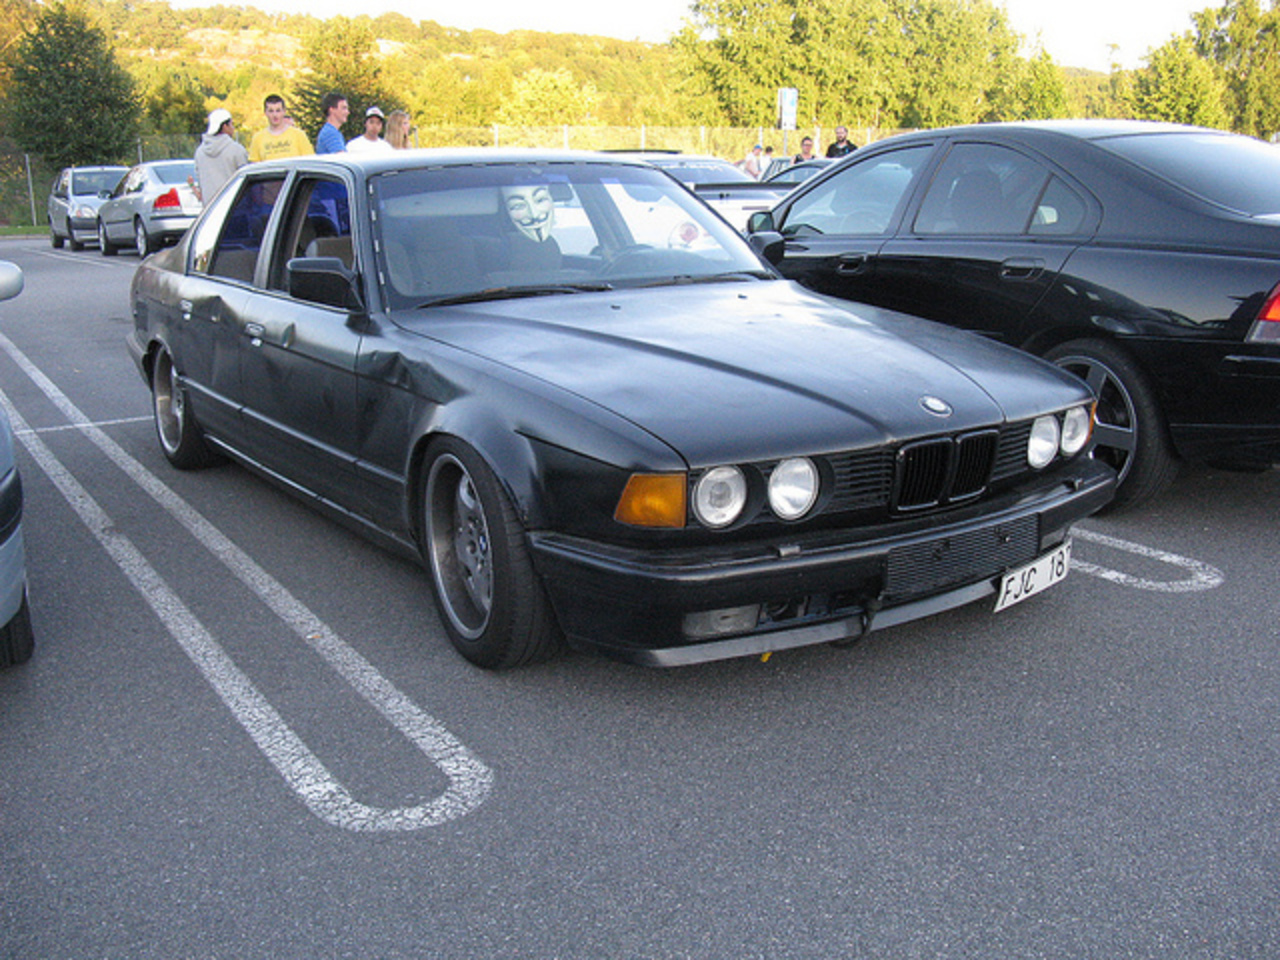 BMW 730i E32 | Flickr - Photo Sharing!